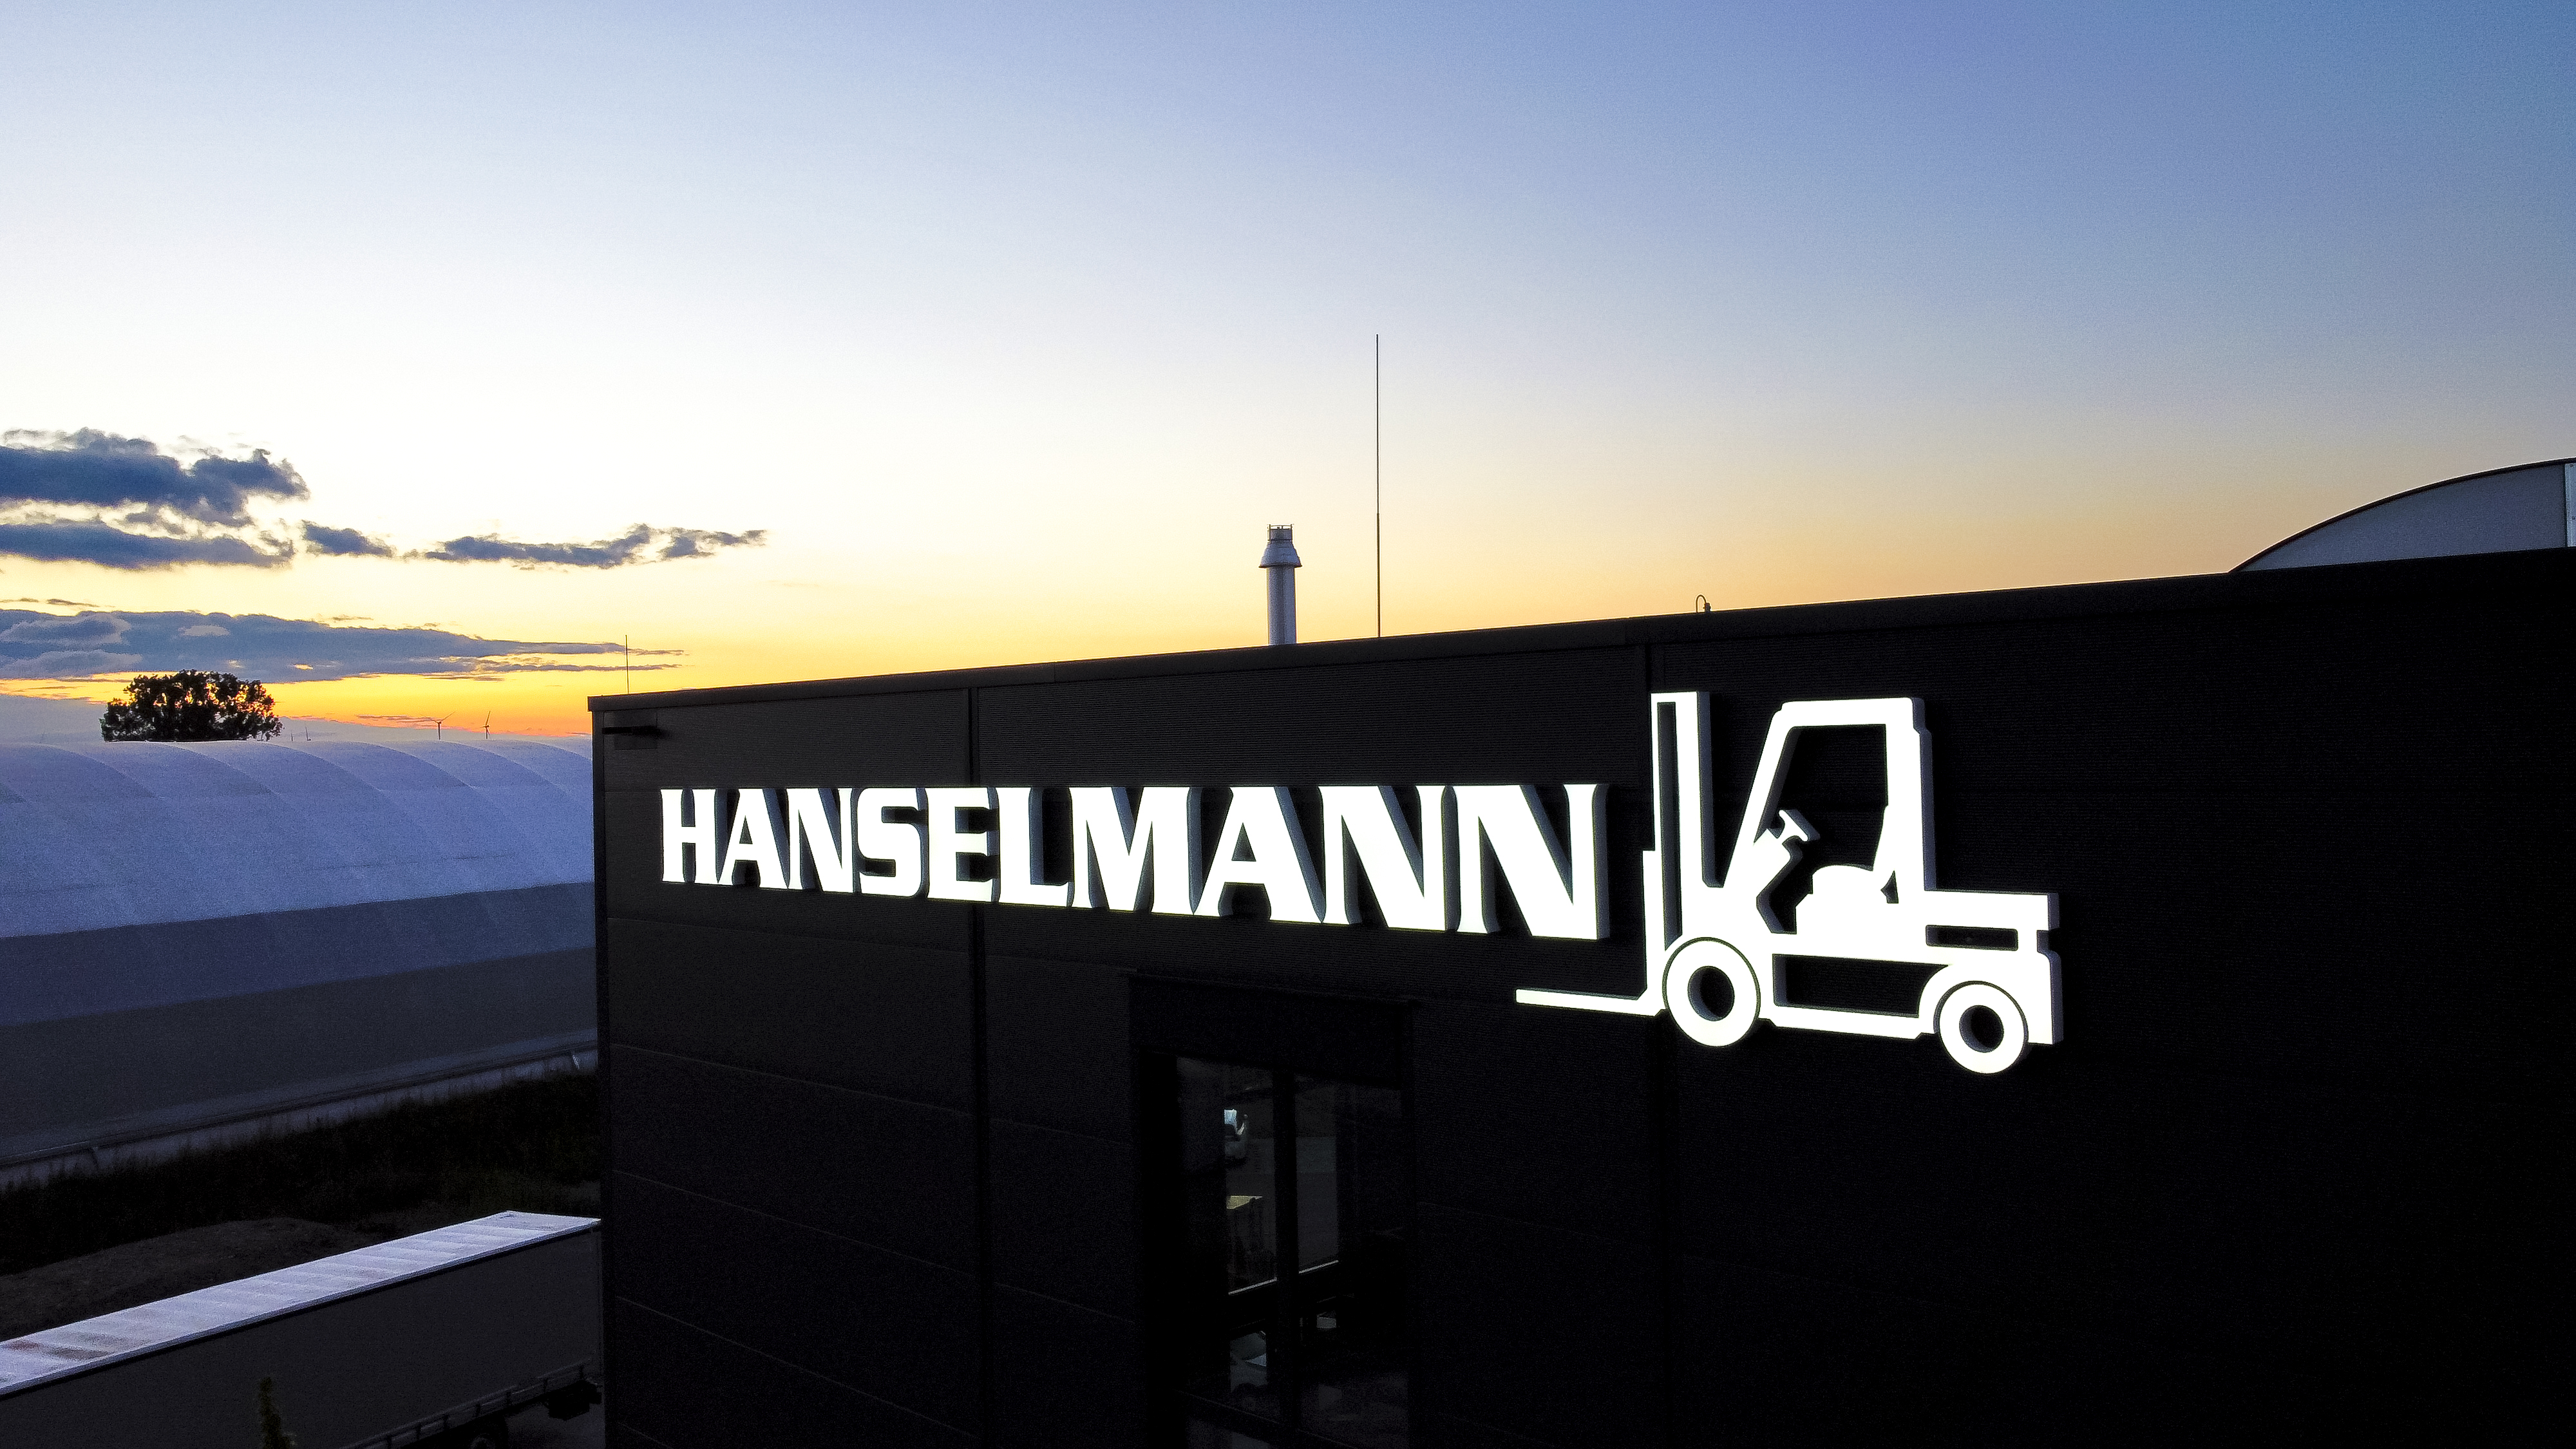 Firmengebäude am Abend mit beleuchtetem LED-Schriftzug "Hanselmann" in 6500K